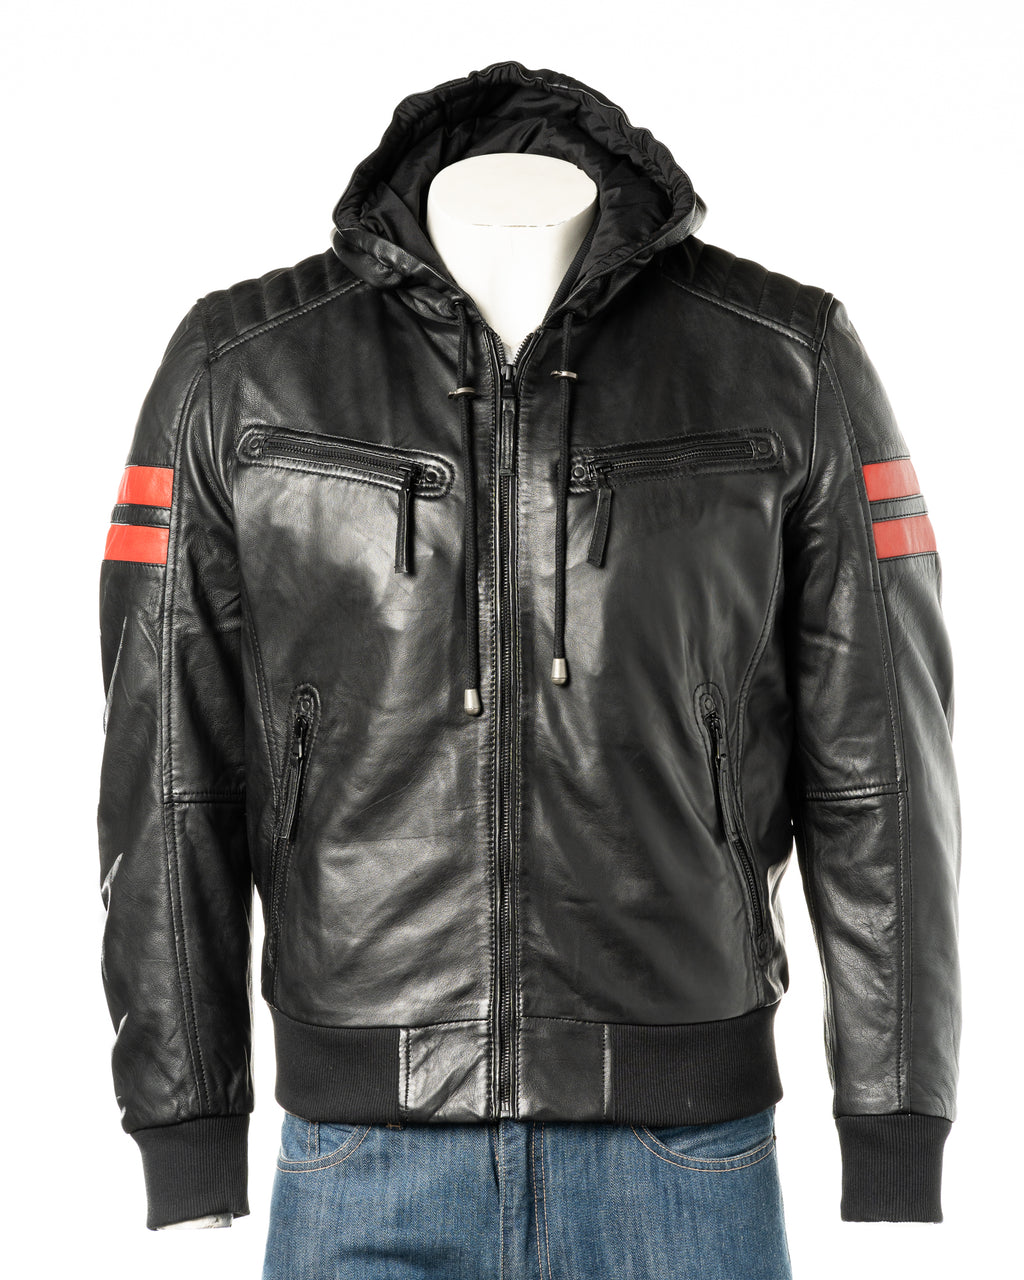 Men's Black Hooded Contrast Panelled Racer Style Leather Jacket: Rolando